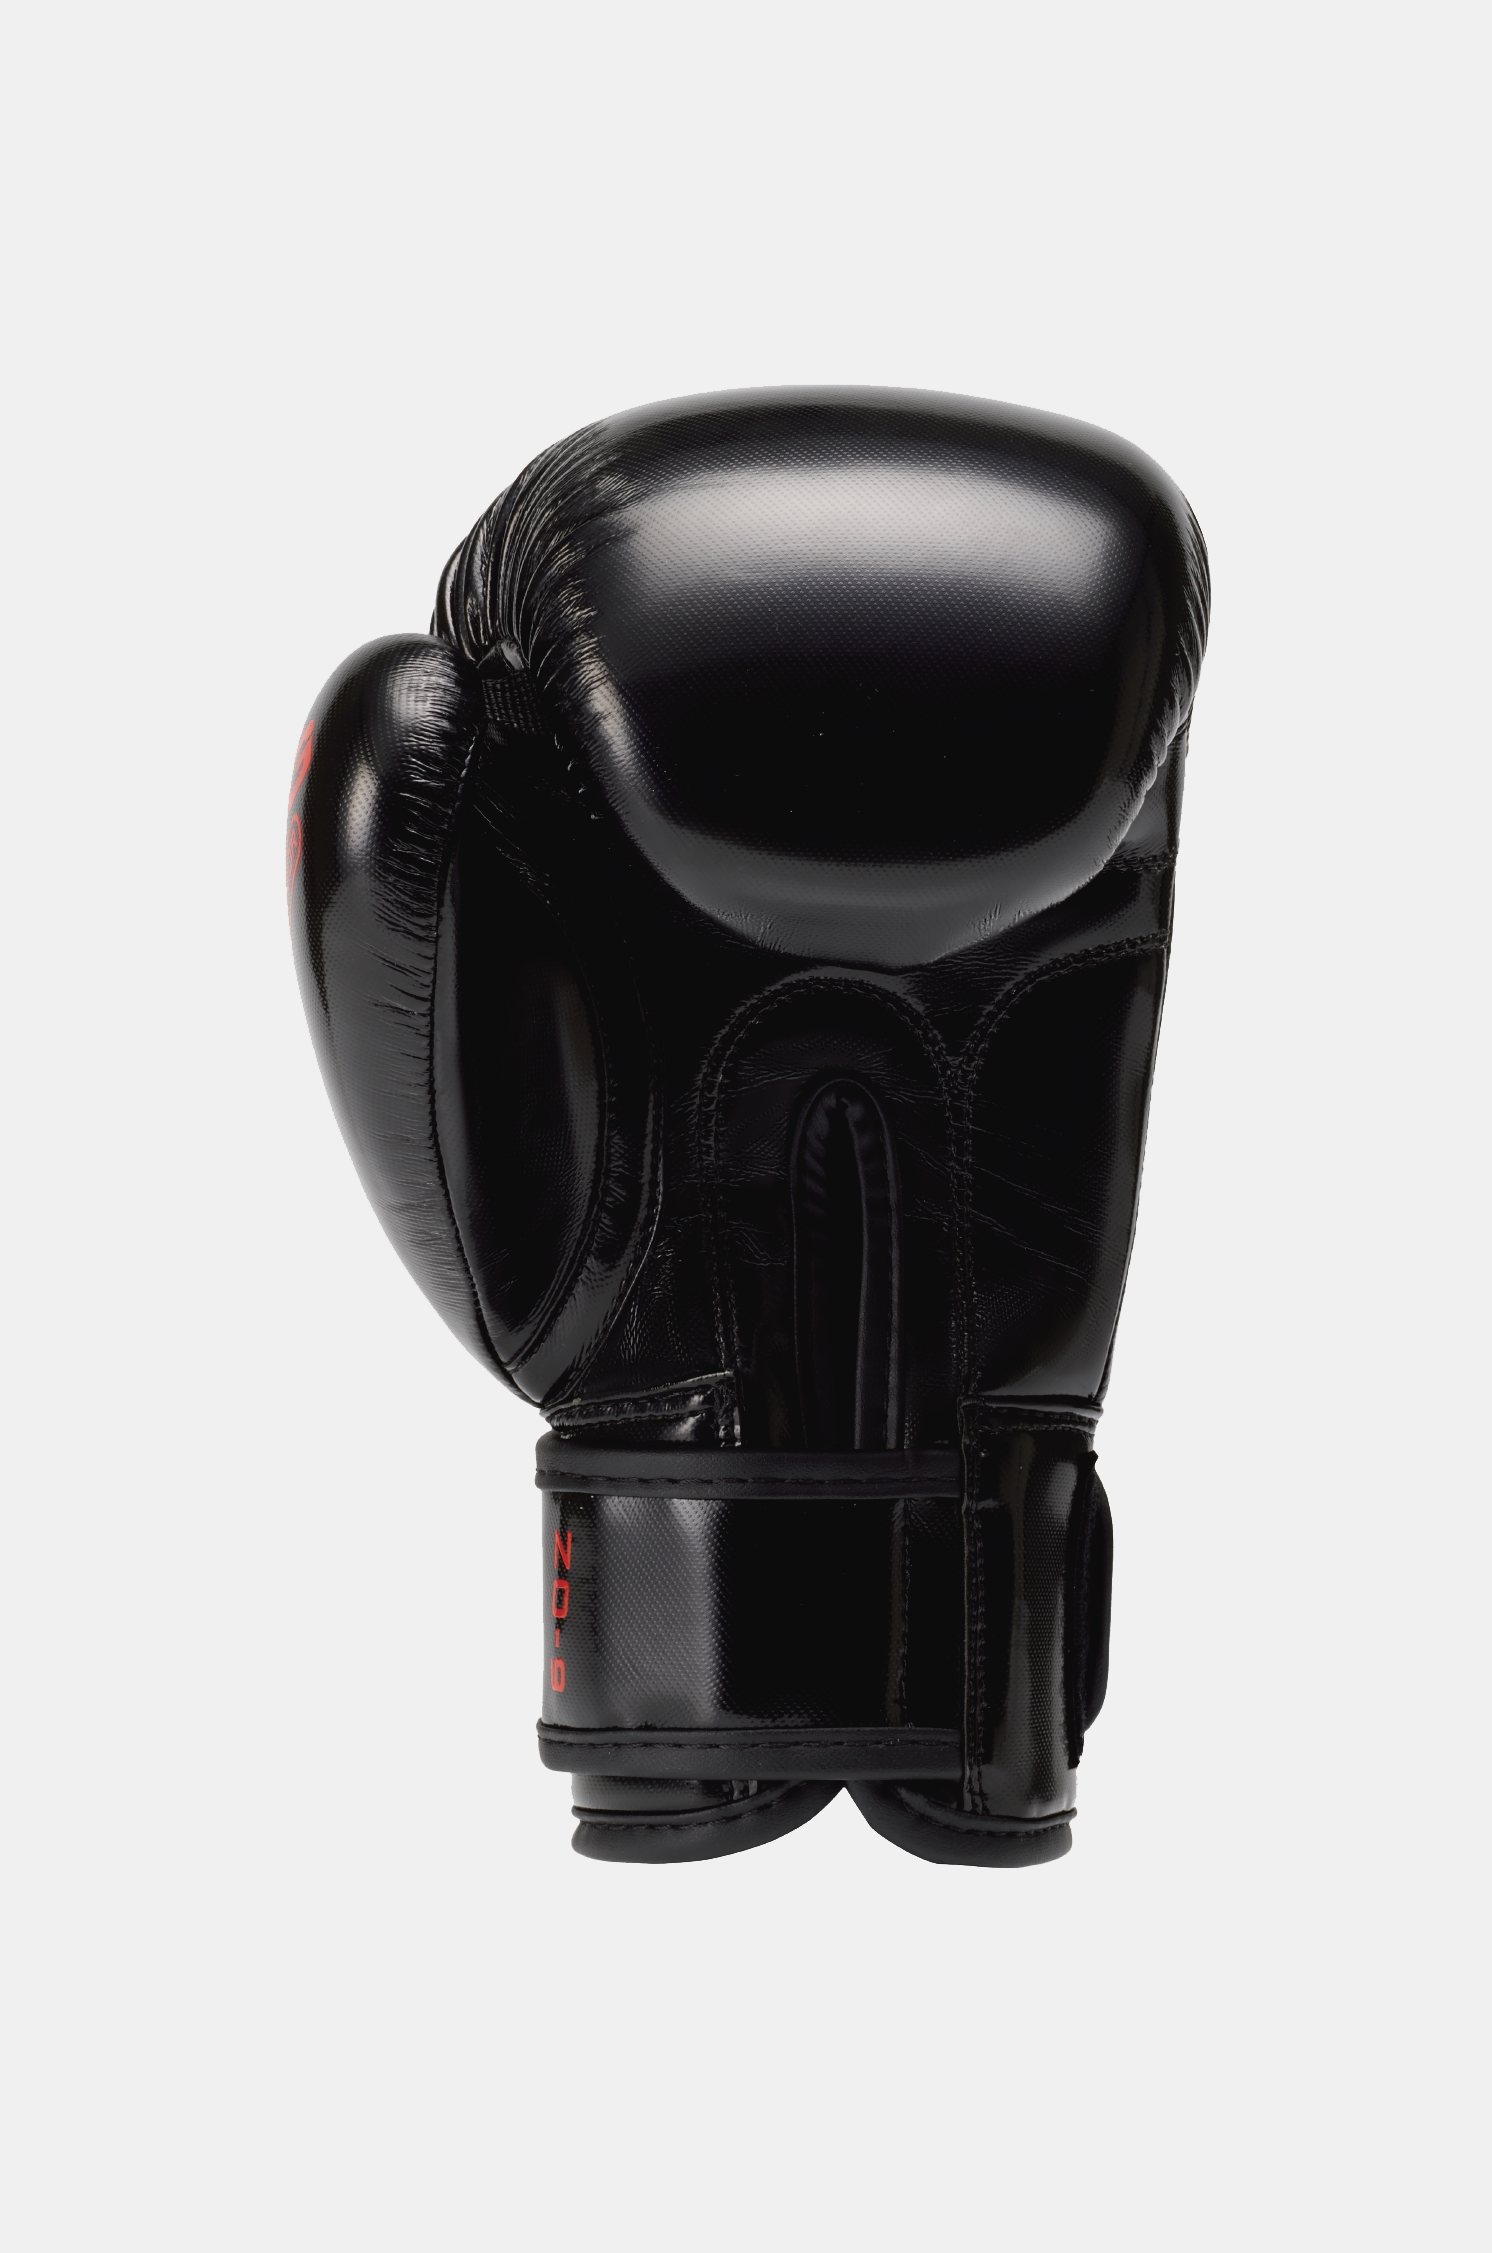 STING Arma Junior Boxing Gloves Black Red